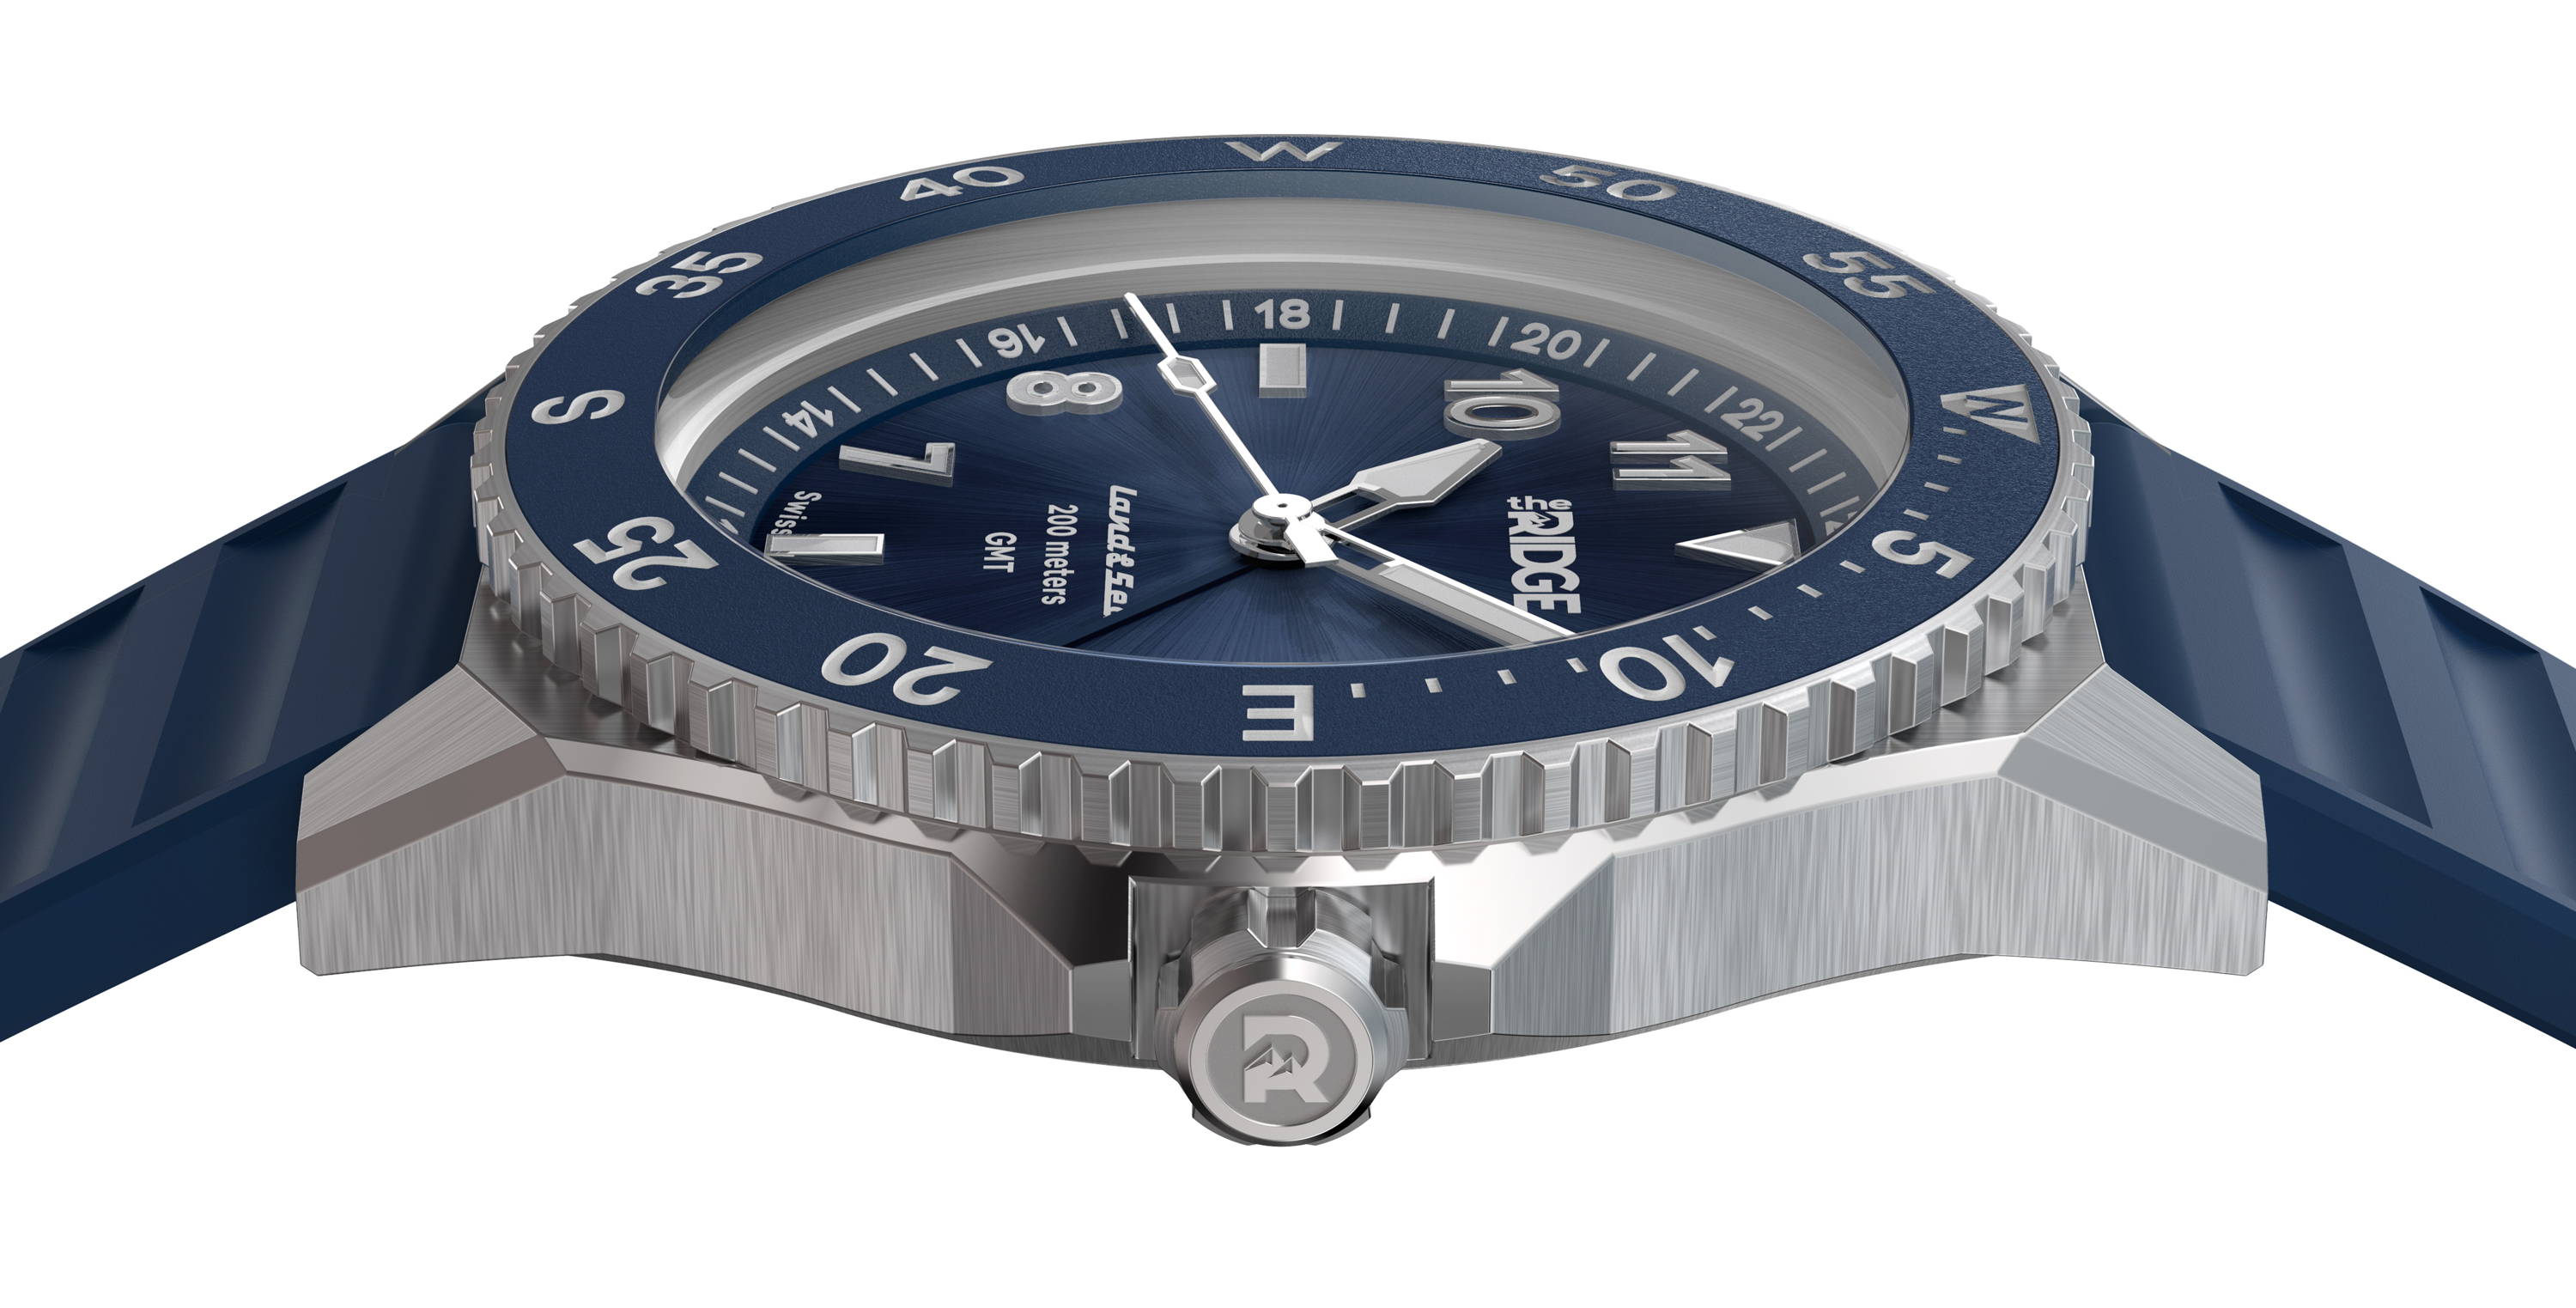 Land & Sea GMT Watch Strap Comparison